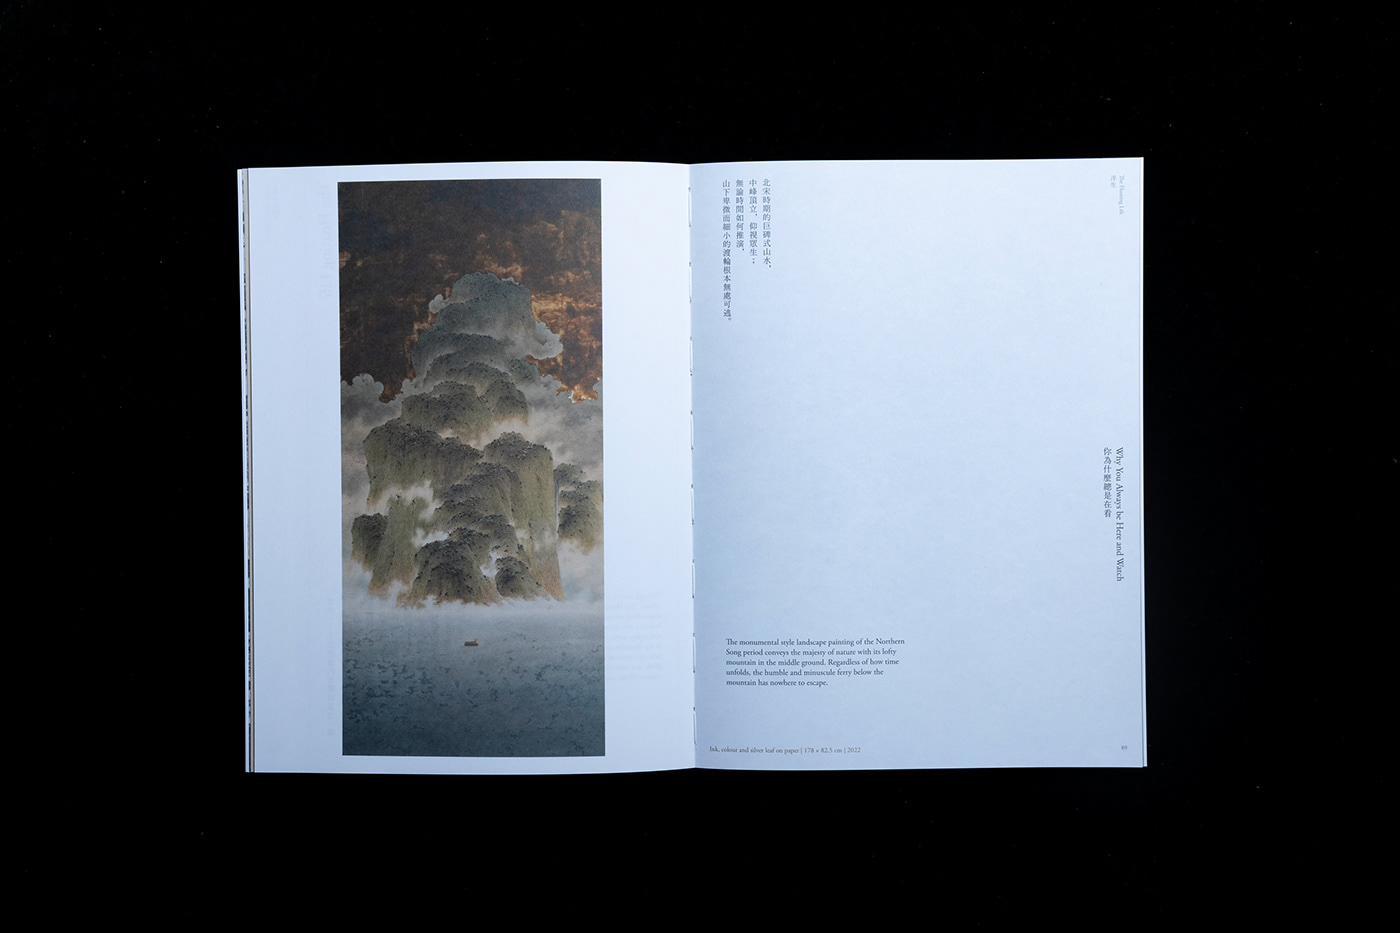 publication art design book cover graphic design  print Layout editorial book design